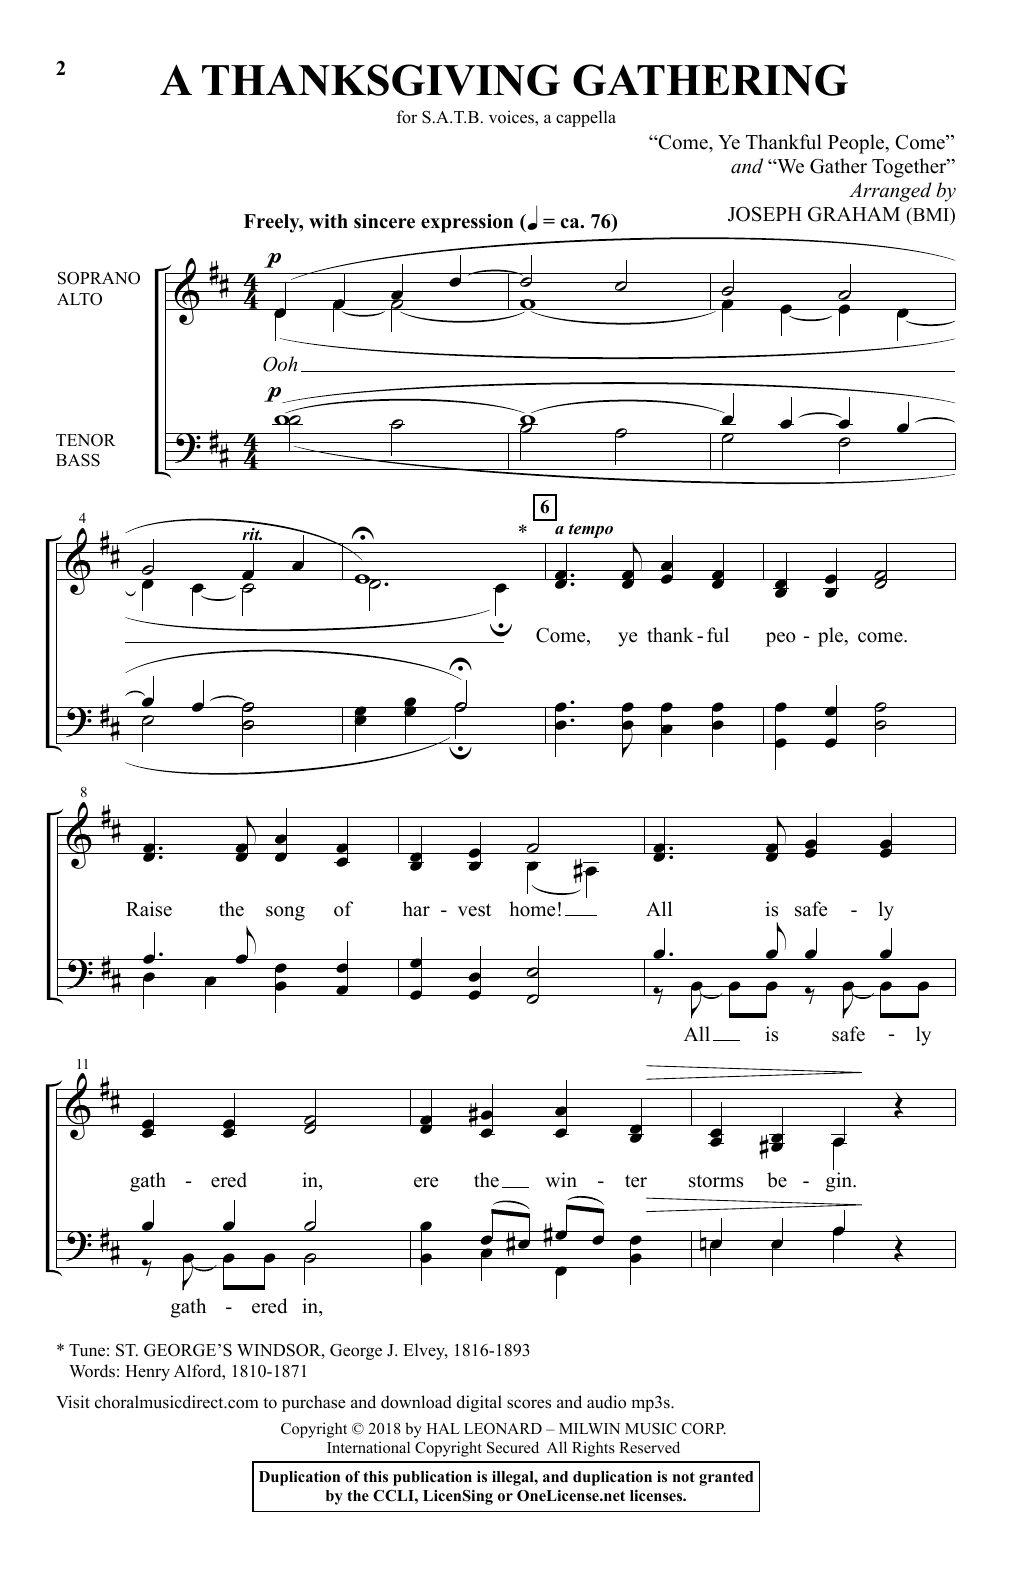 Joseph Graham A Thanksgiving Gathering Sheet Music Notes & Chords for SATB - Download or Print PDF